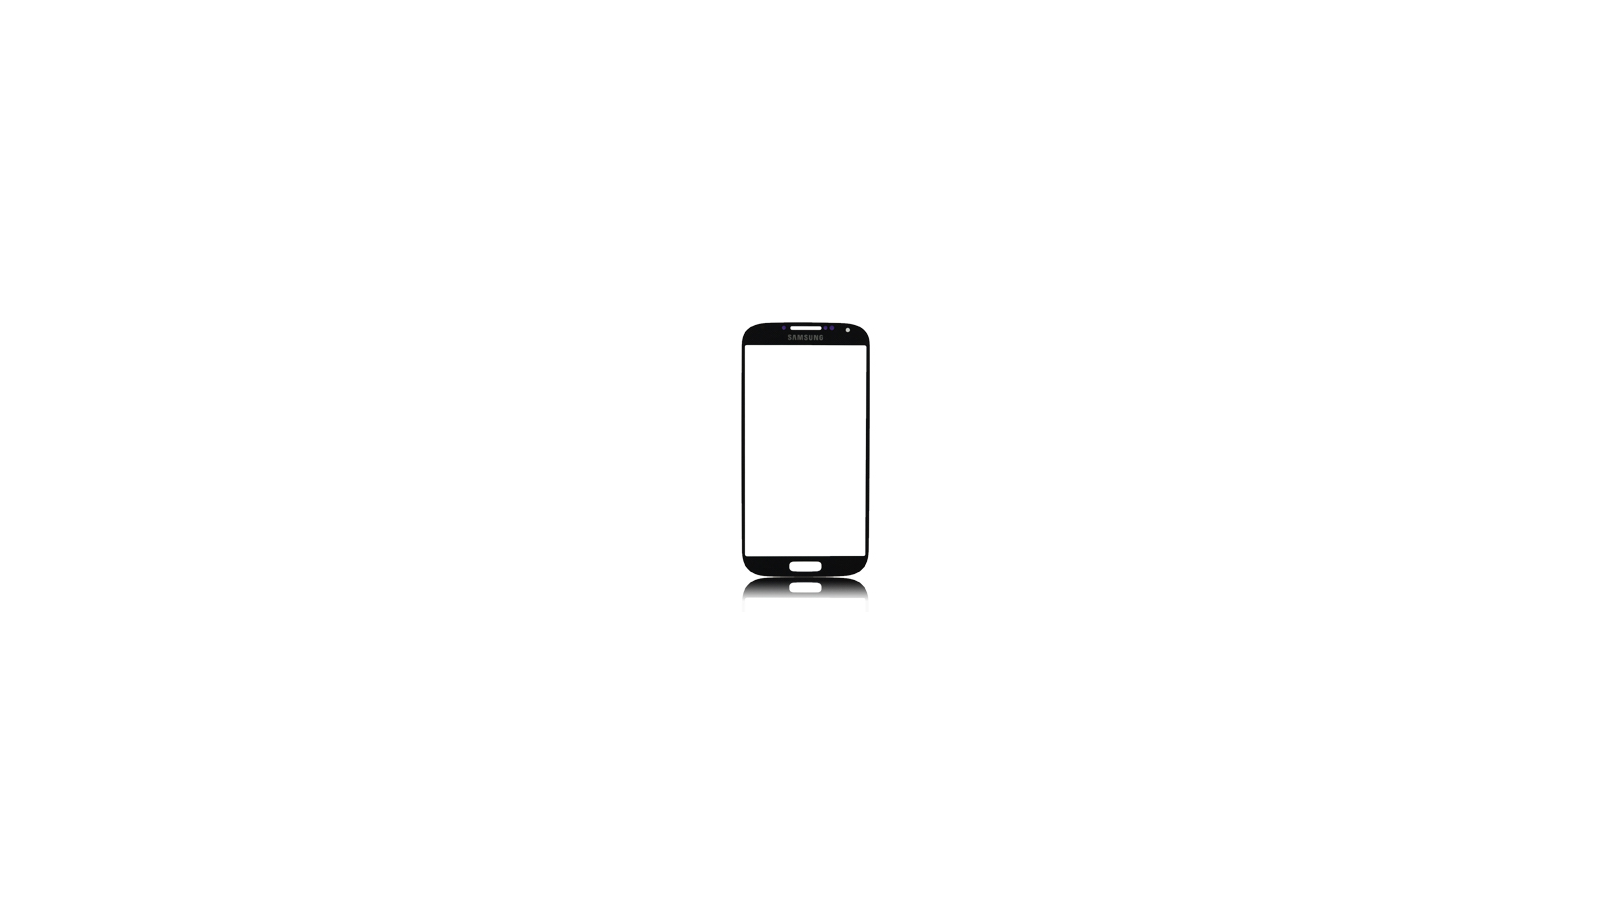 Vetro per touch screen Samsung Galaxy S4 i9500 i9505 Blu